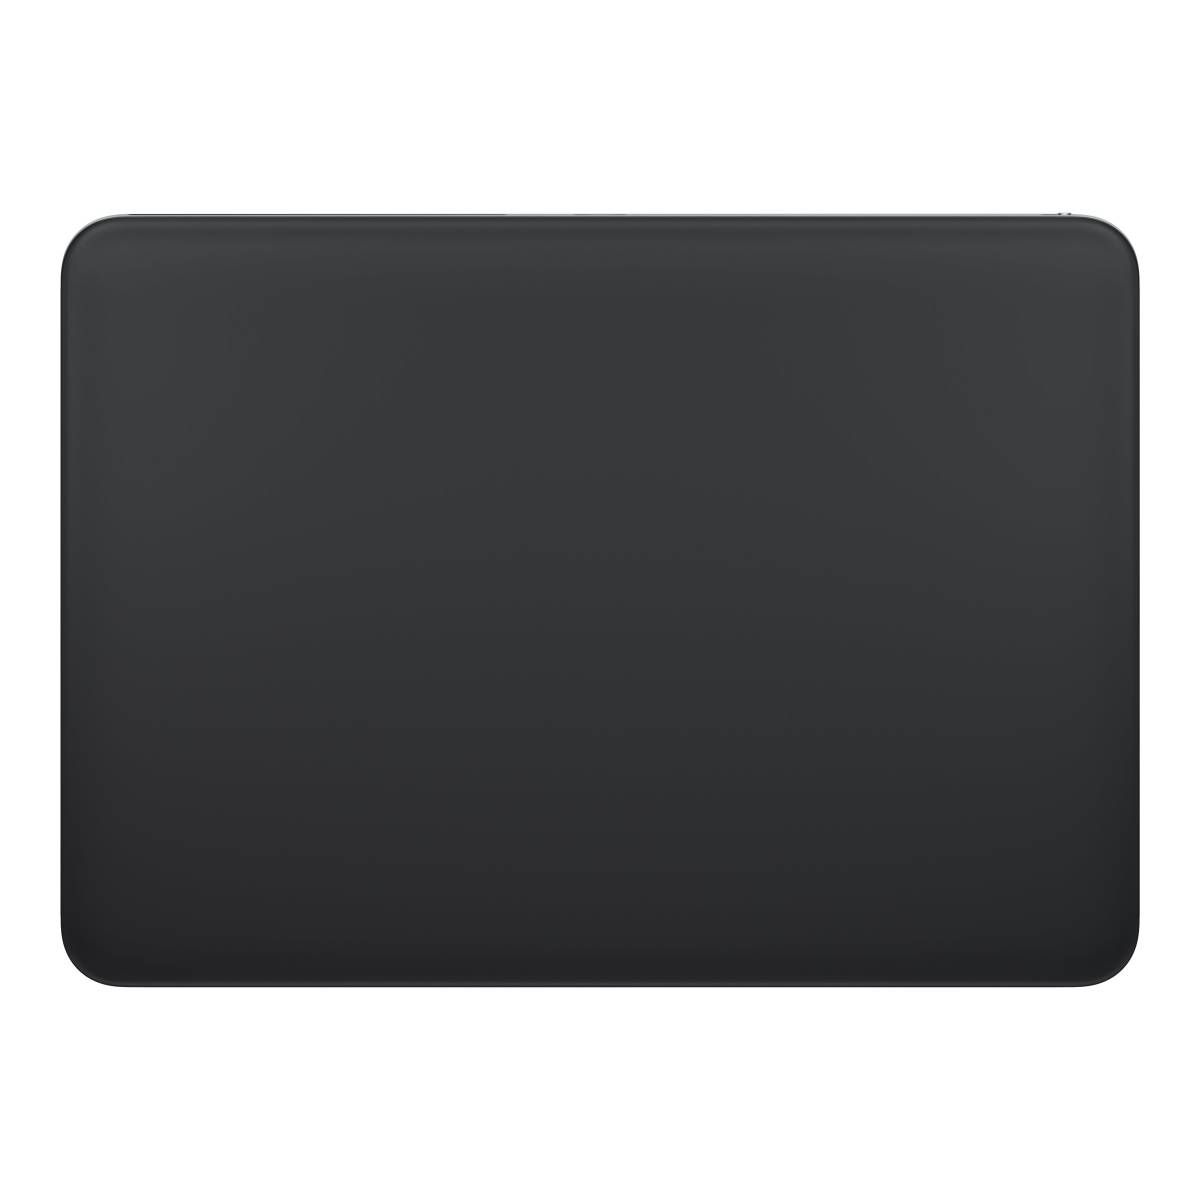 Apple Magic Trackpad 2 - Space Gray 